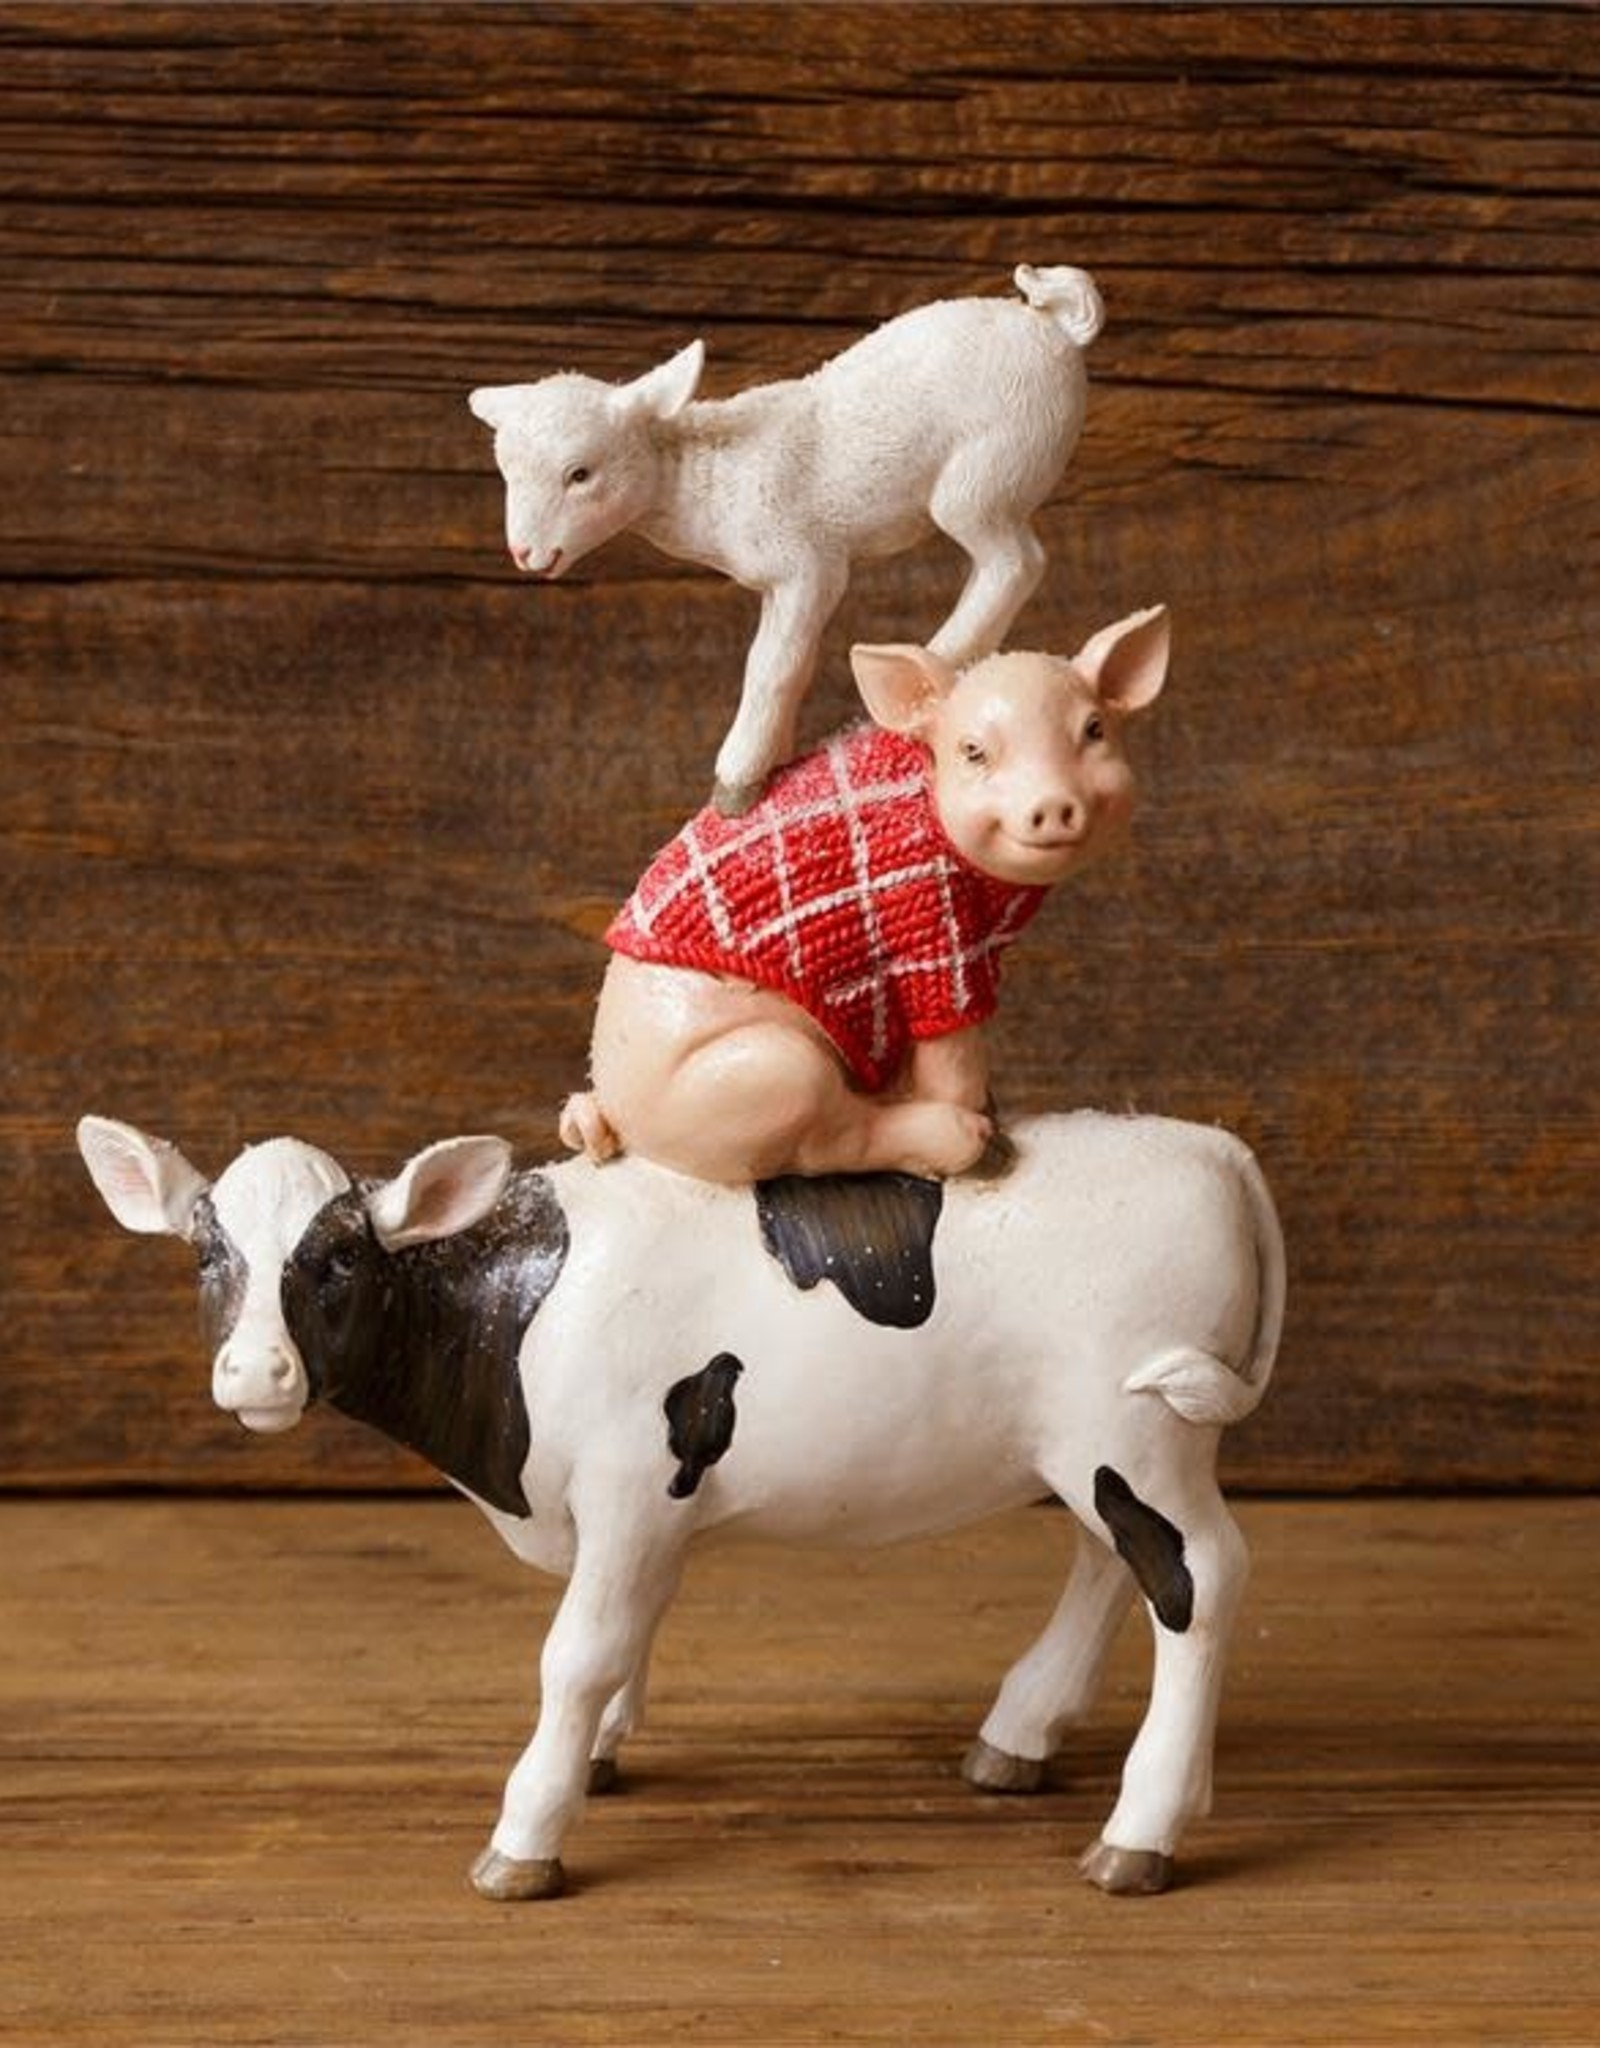 Cow, Pig, and Sheep Figurine